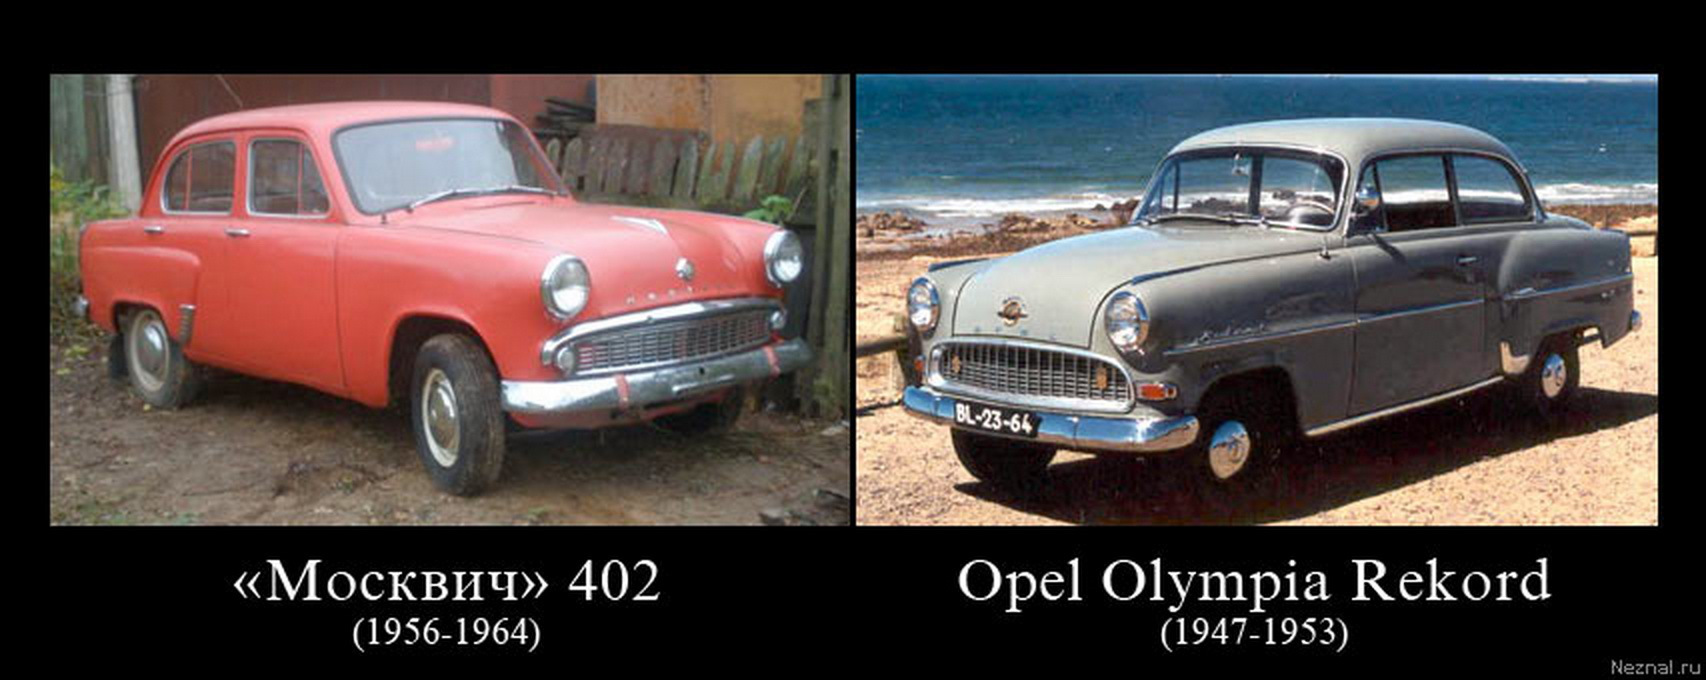 Слизанные машины. Москвич 402 1956. Москвич 402 и Opel Olympia Rekord. Москвич 402 Opel Olympia. Москвич 402 и Опель Олимпия рекорд..